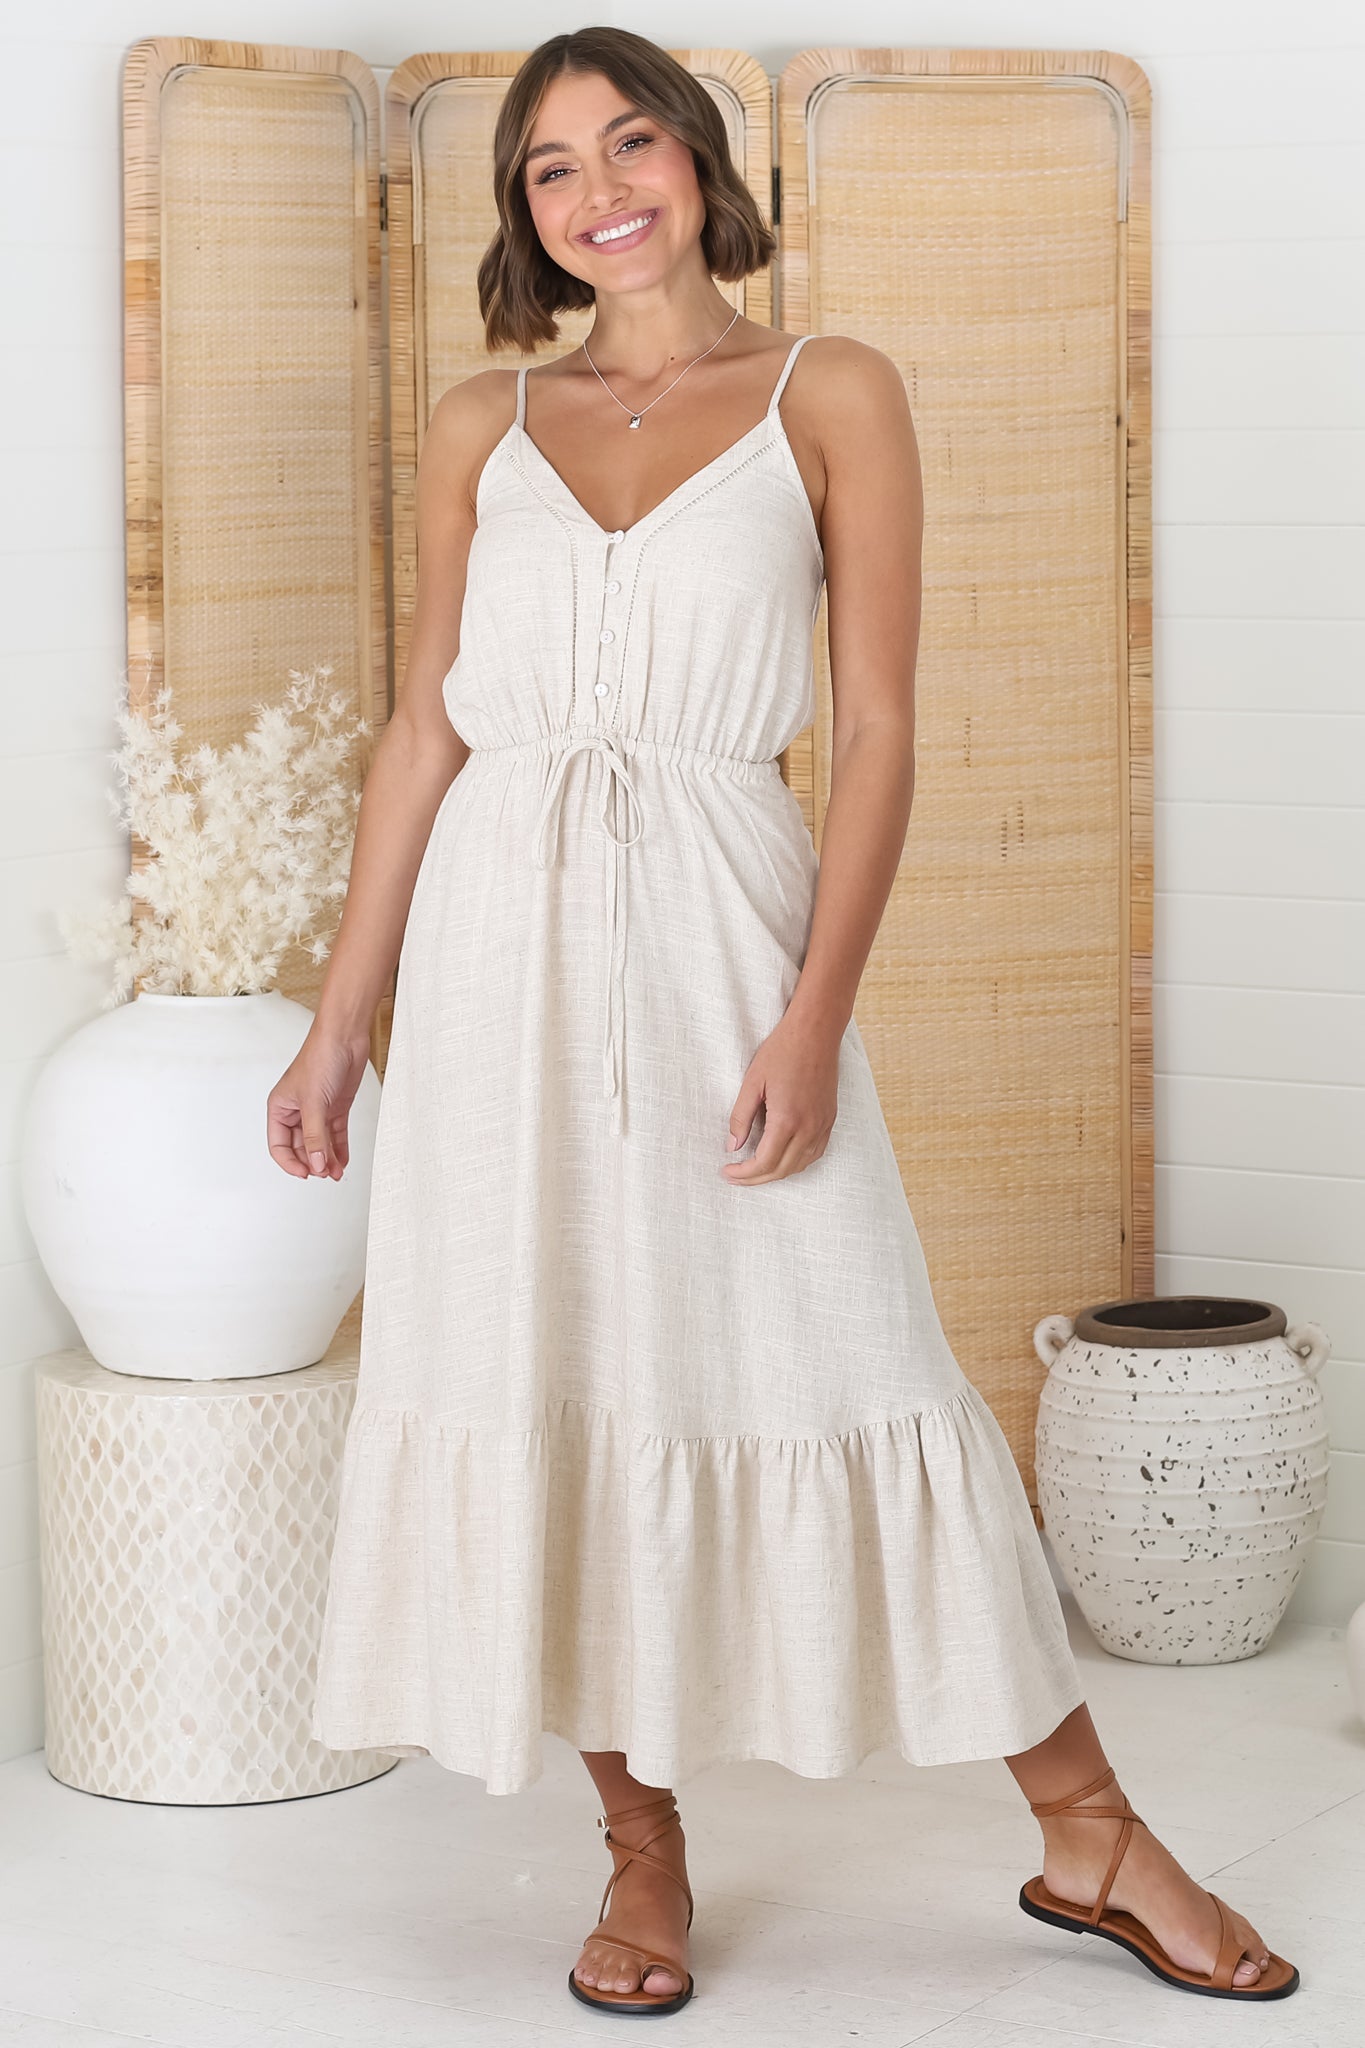 Ansel Midi Dress - Adjustable Strap Linen Sun Dress in Livvy Oat